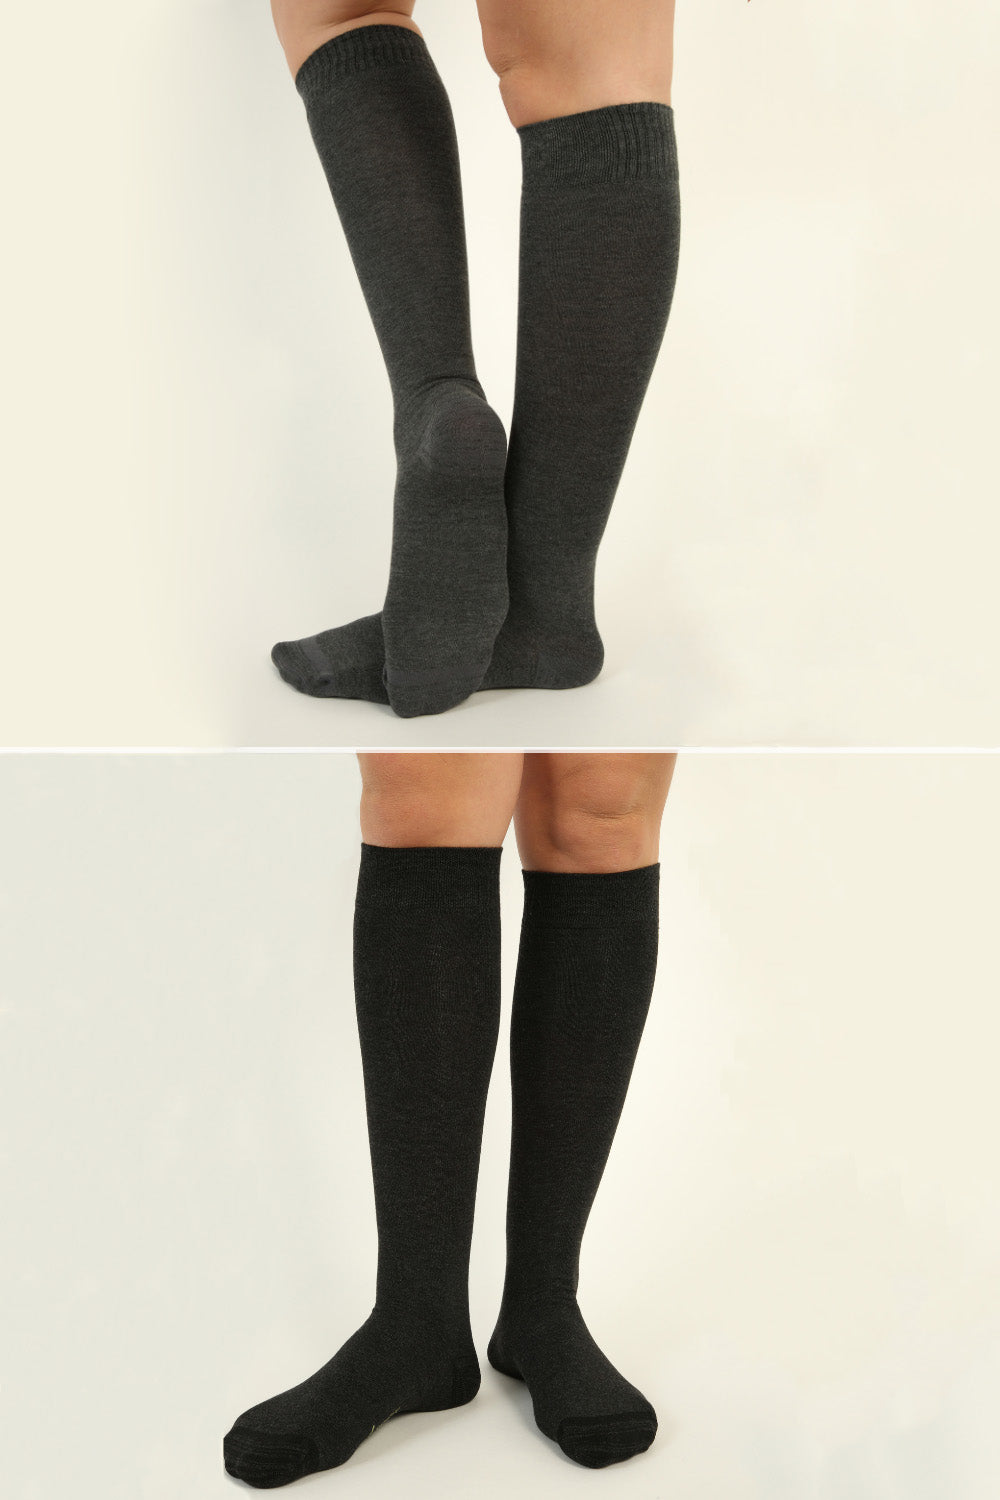 Knee-High Seamless Bamboo Socks - 4 pairs